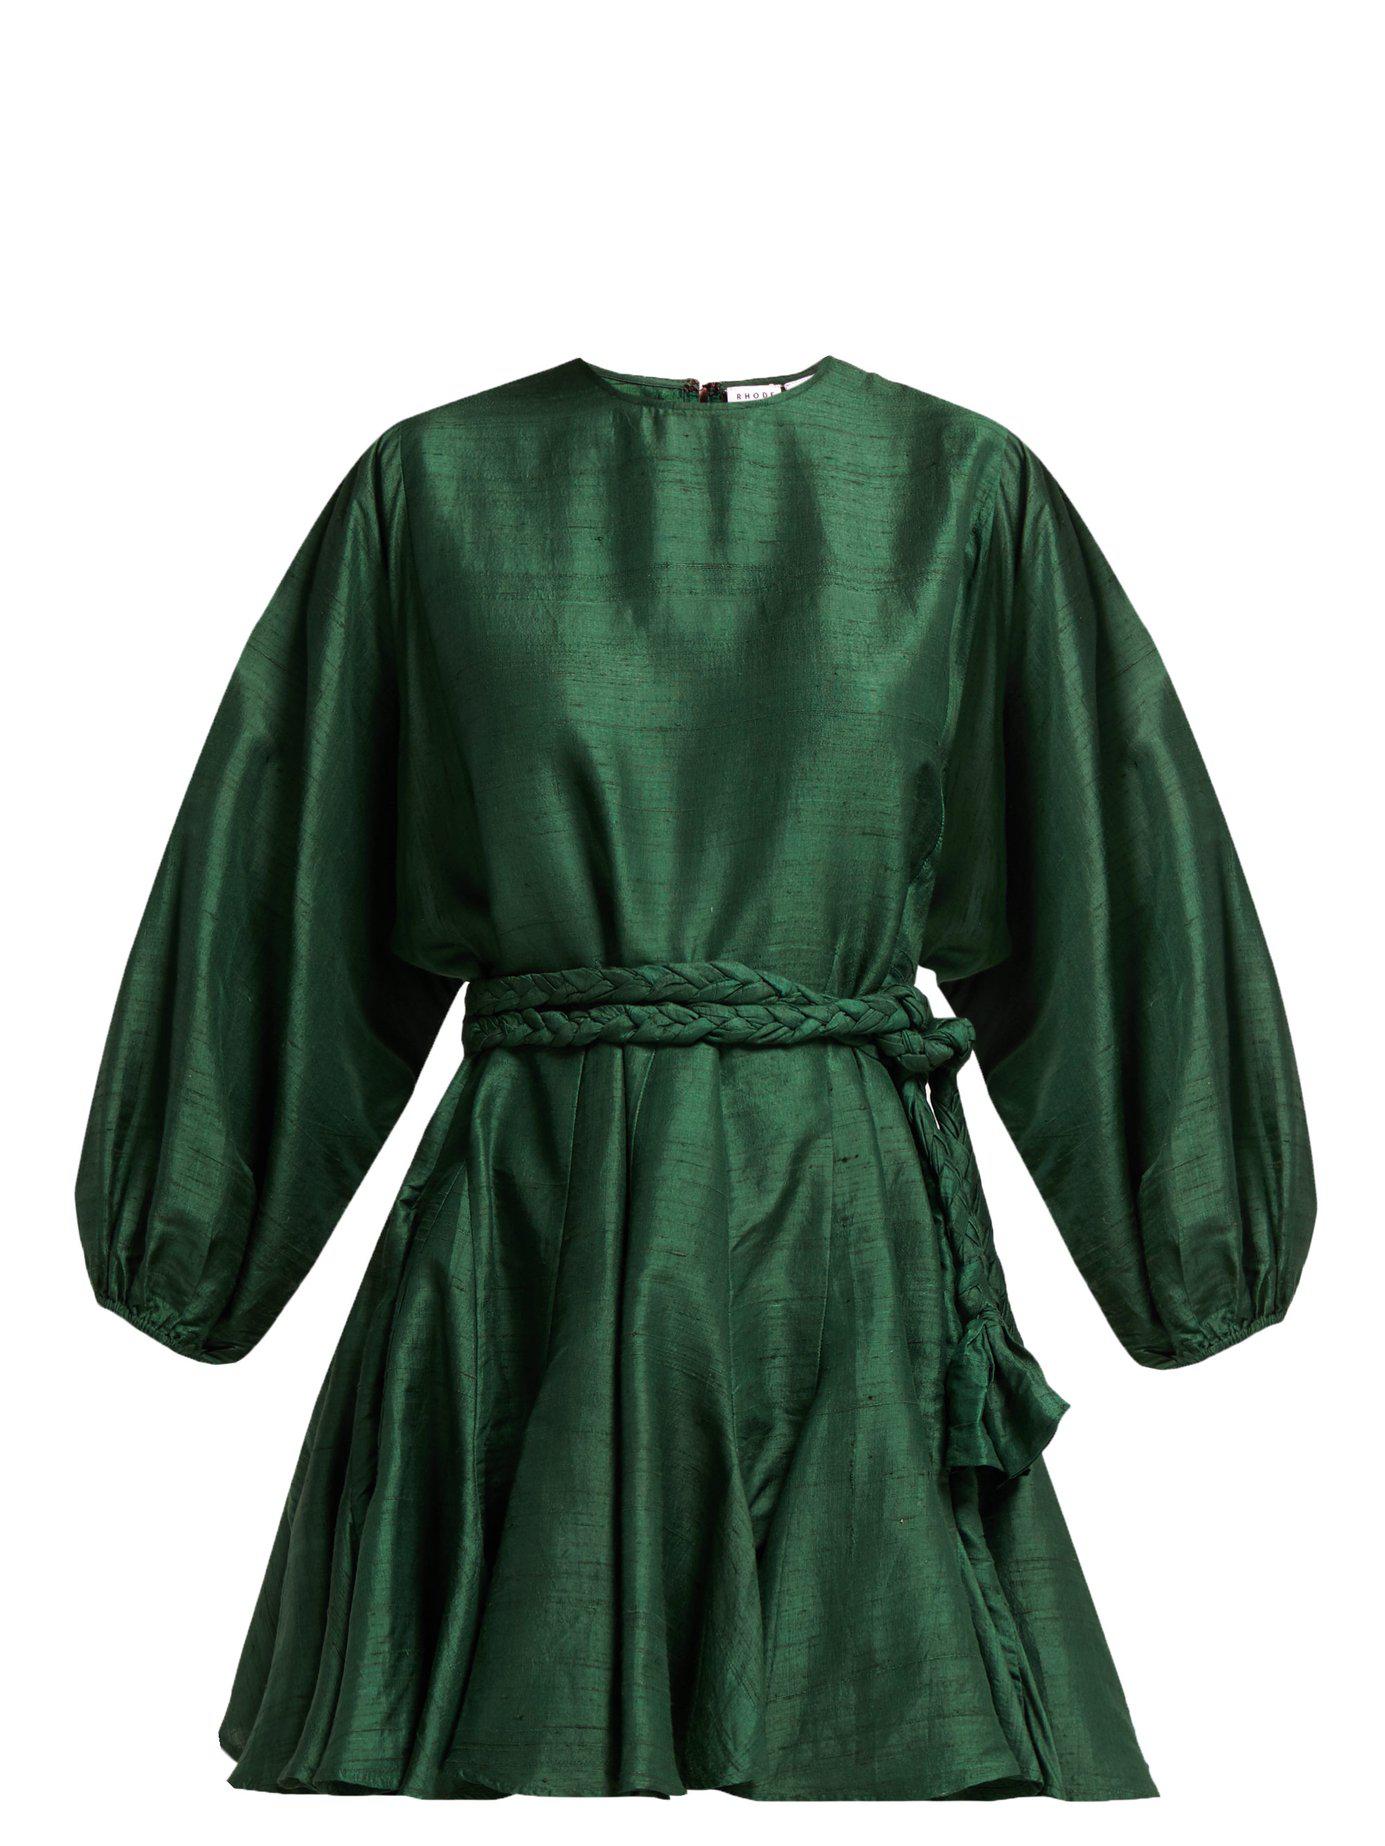 RHODE Ella Silk Dress in Green - Lyst